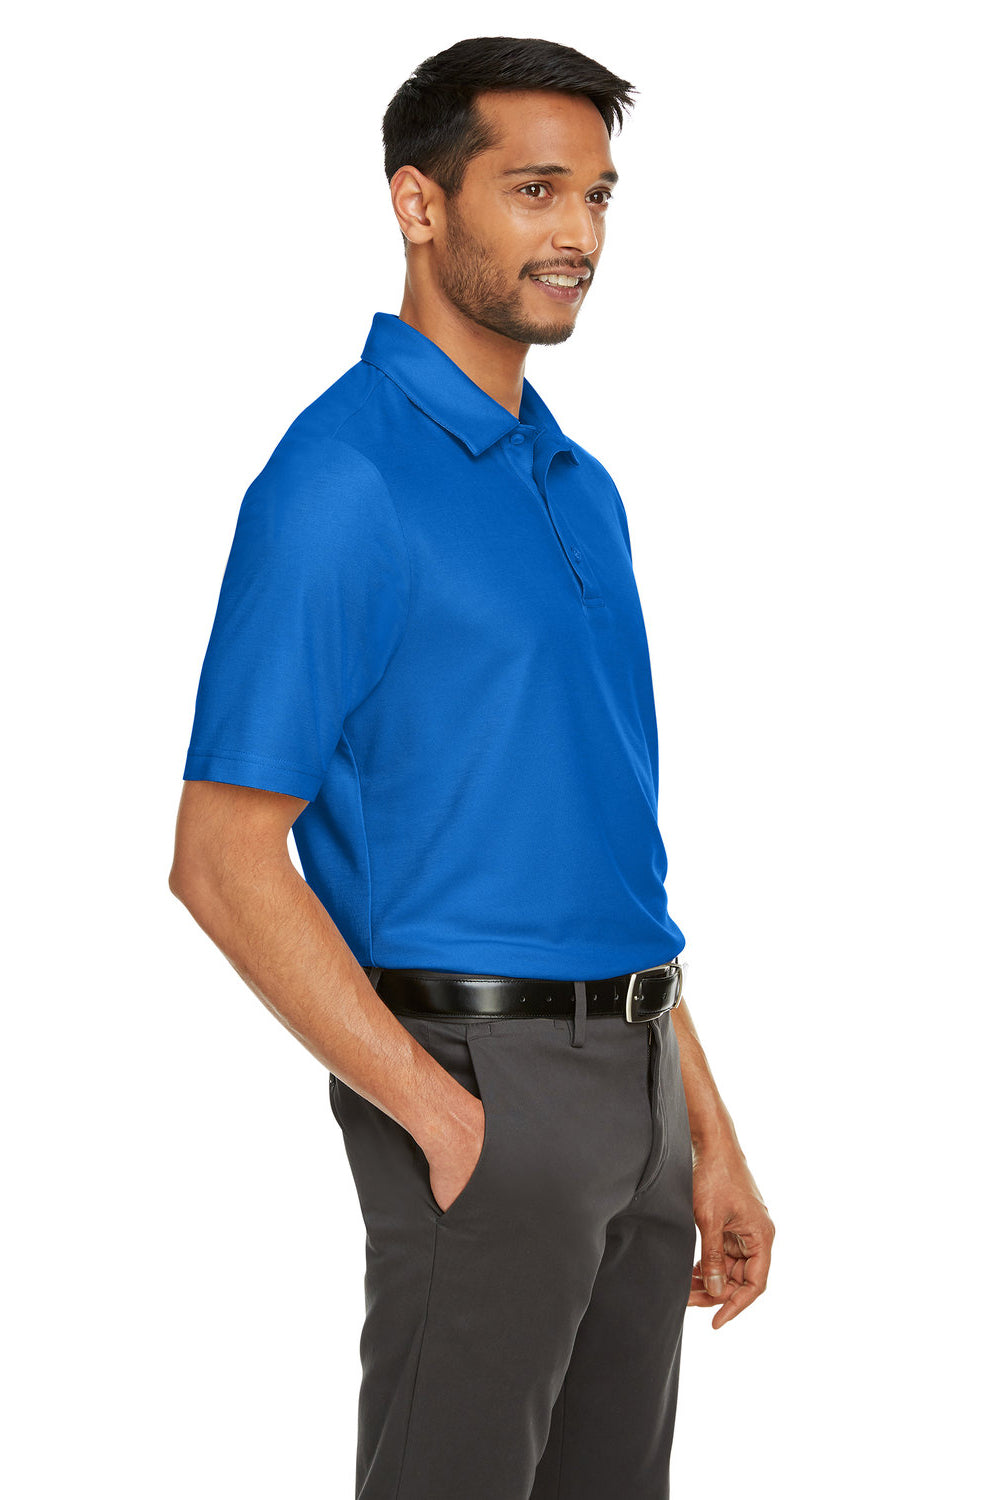 Core 365 CE112 Mens Fusion ChromaSoft Performance Moisture Wicking Short Sleeve Polo Shirt True Royal Blue 3Q